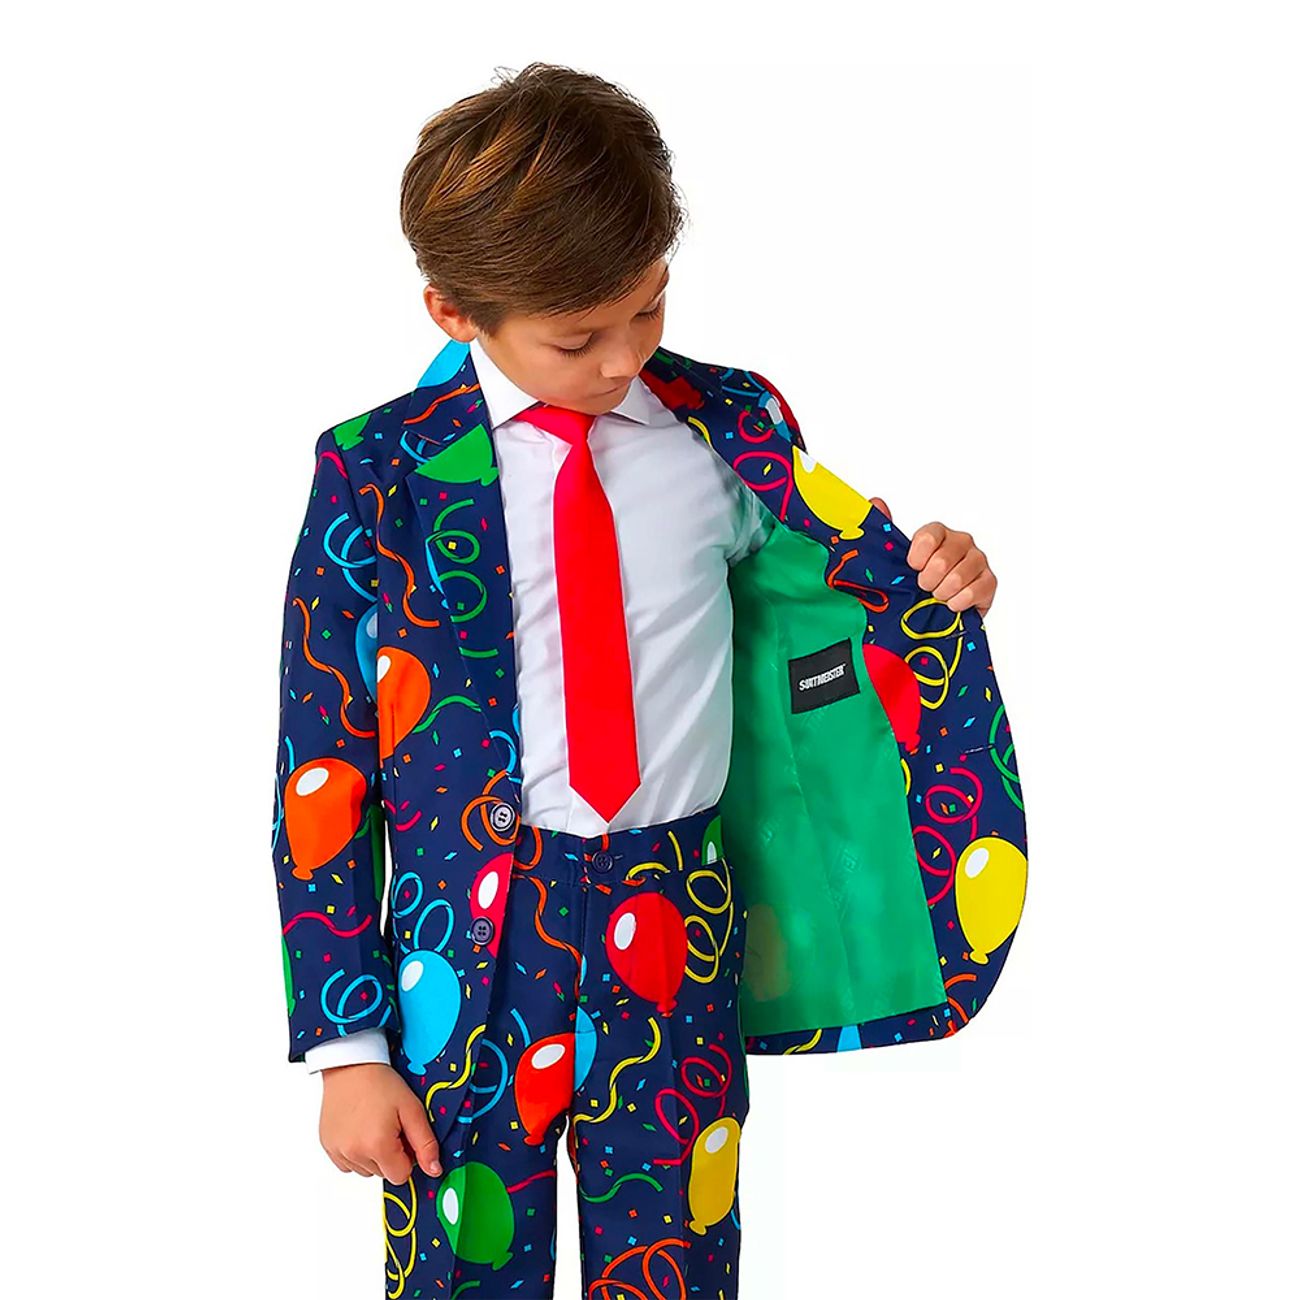 suitmeister-boys-confetti-balloons-navy-kostym-85804-3